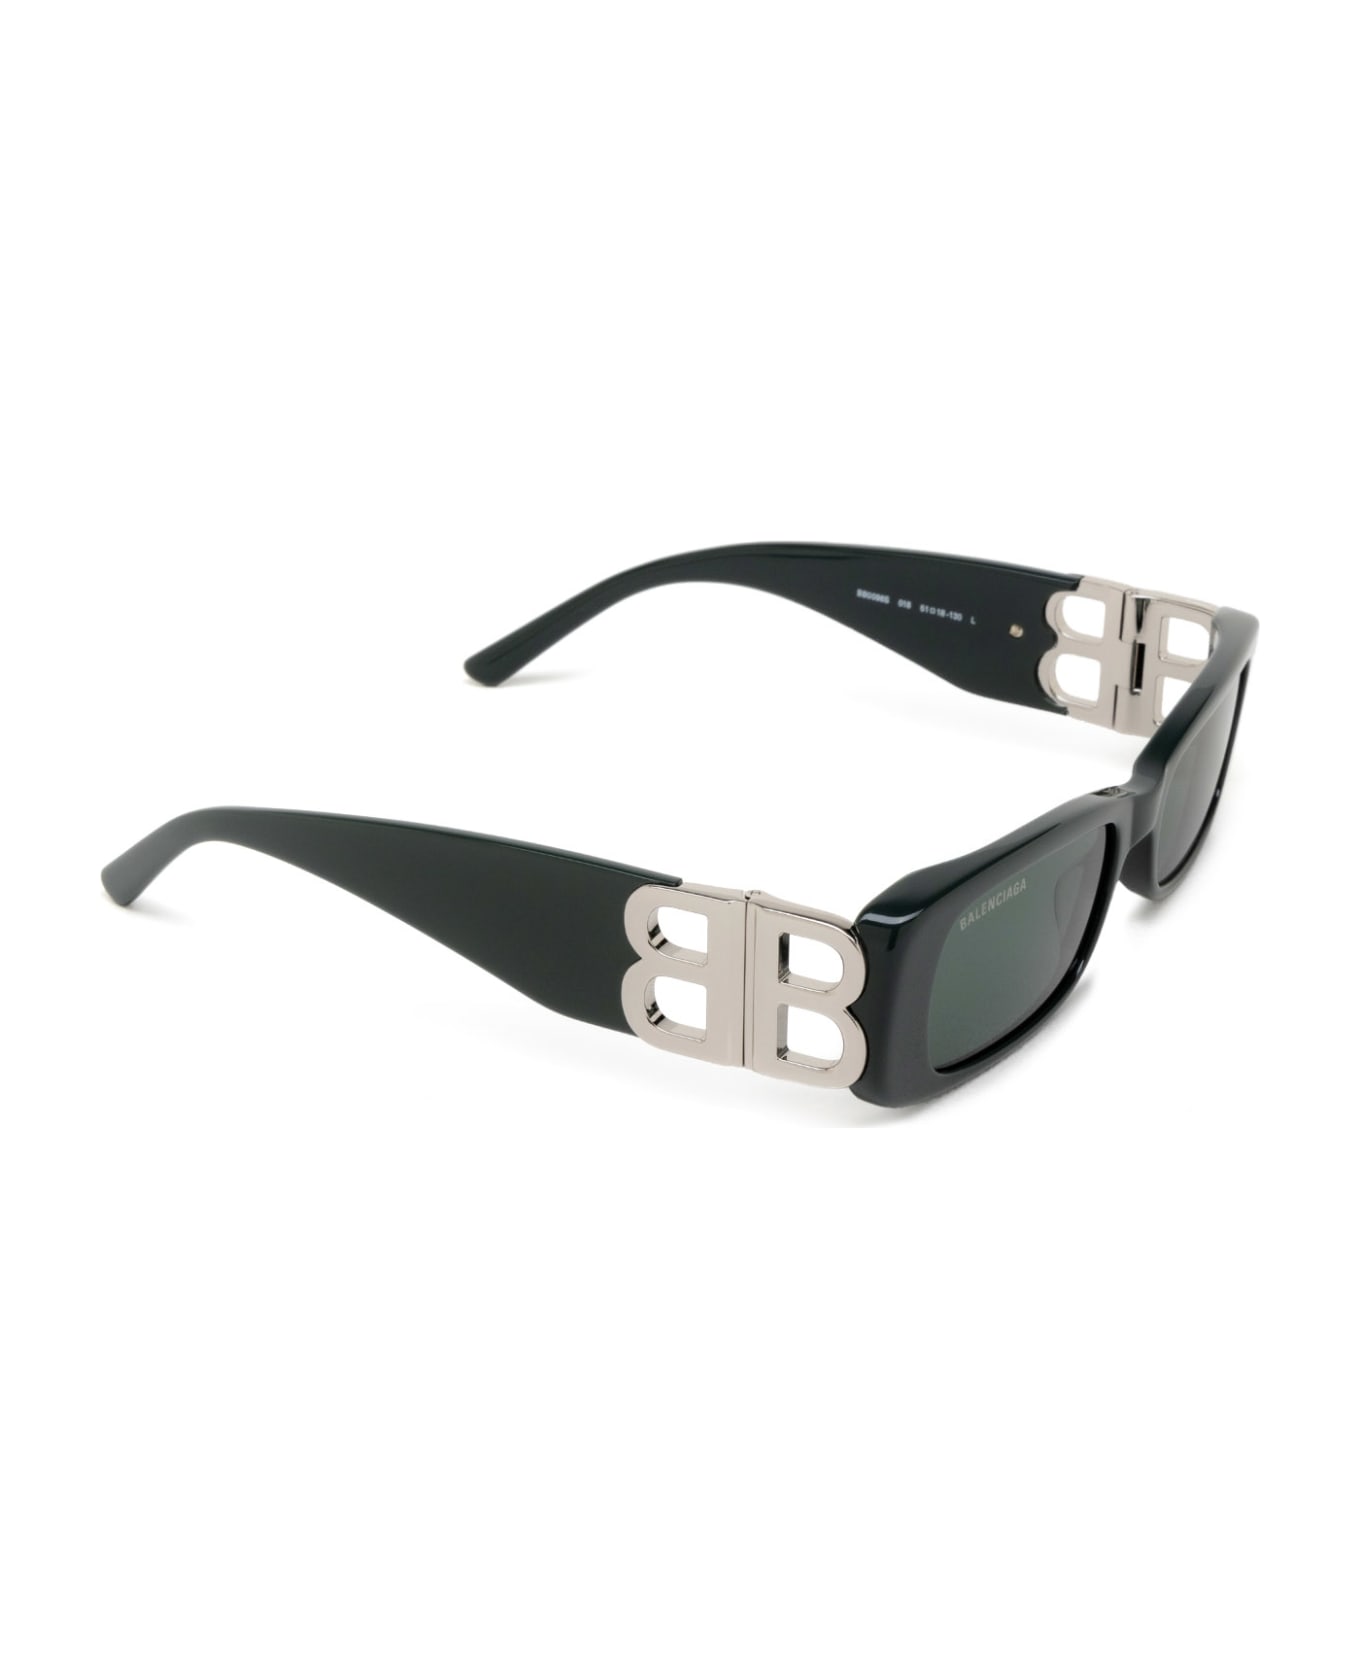 Balenciaga Eyewear Bb0096s Sunglasses - 018 GREEN SILVER GREEN